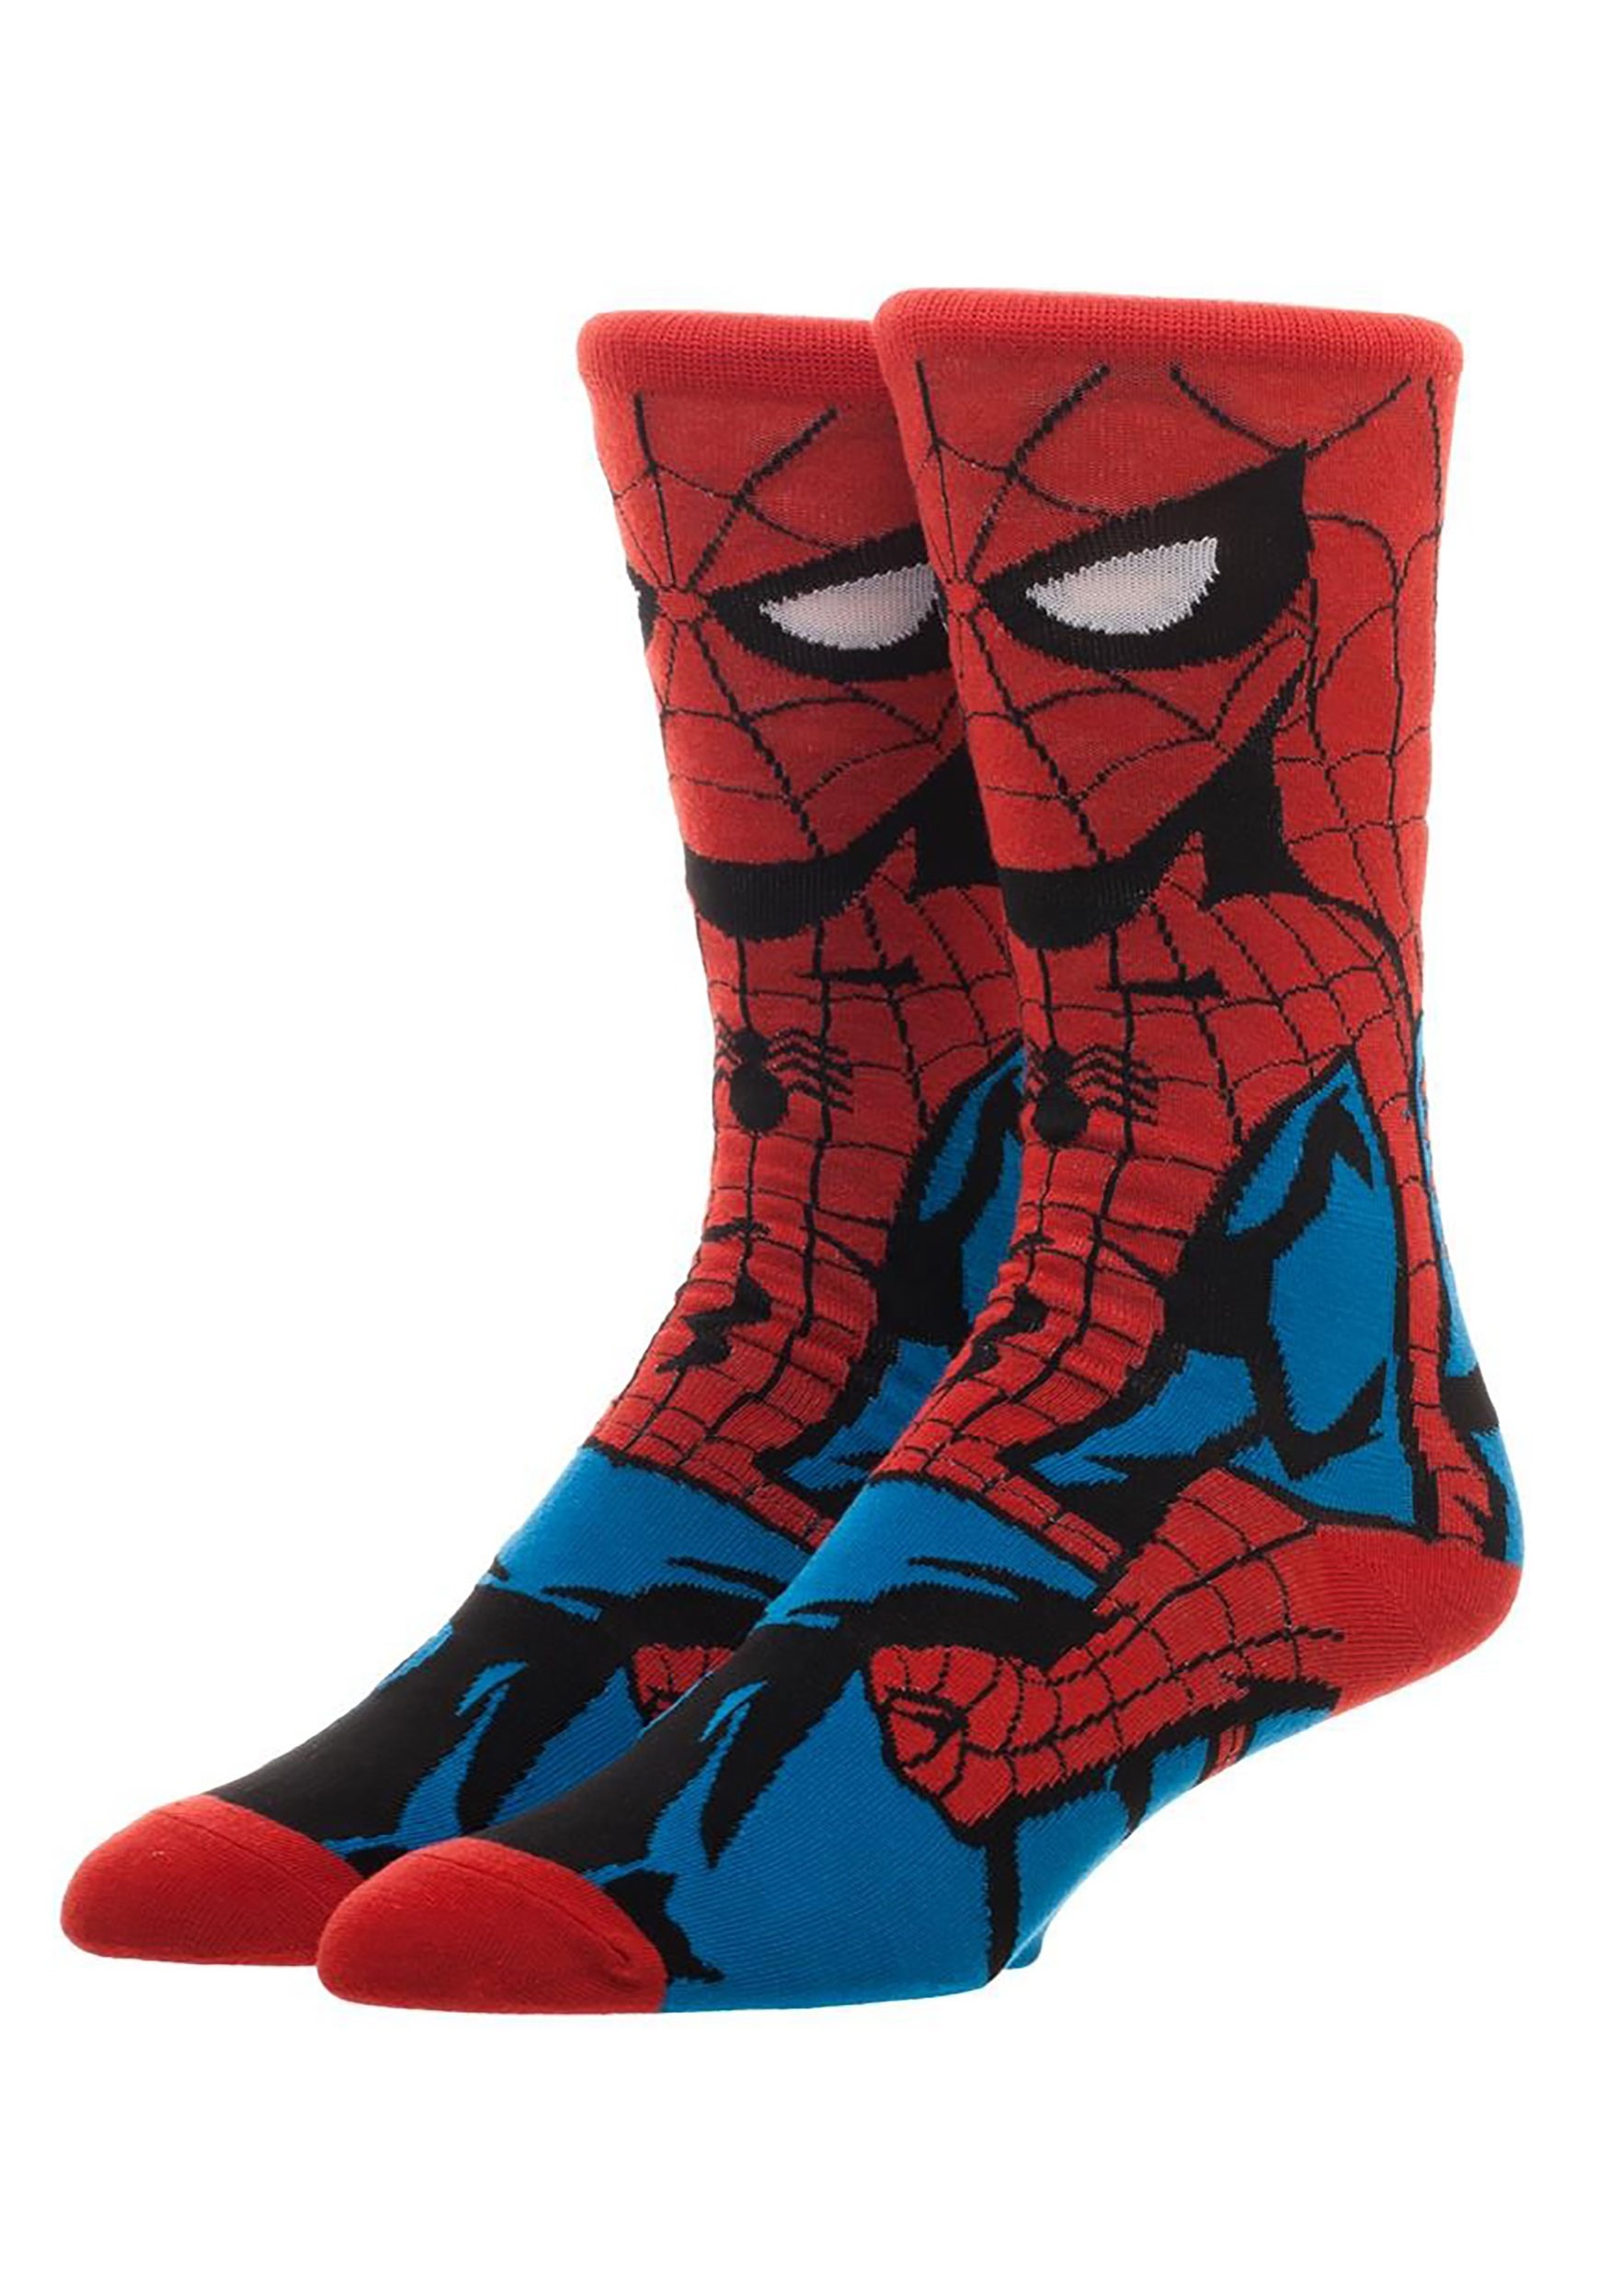 Marvel Spider-Man 360 Crew Socks